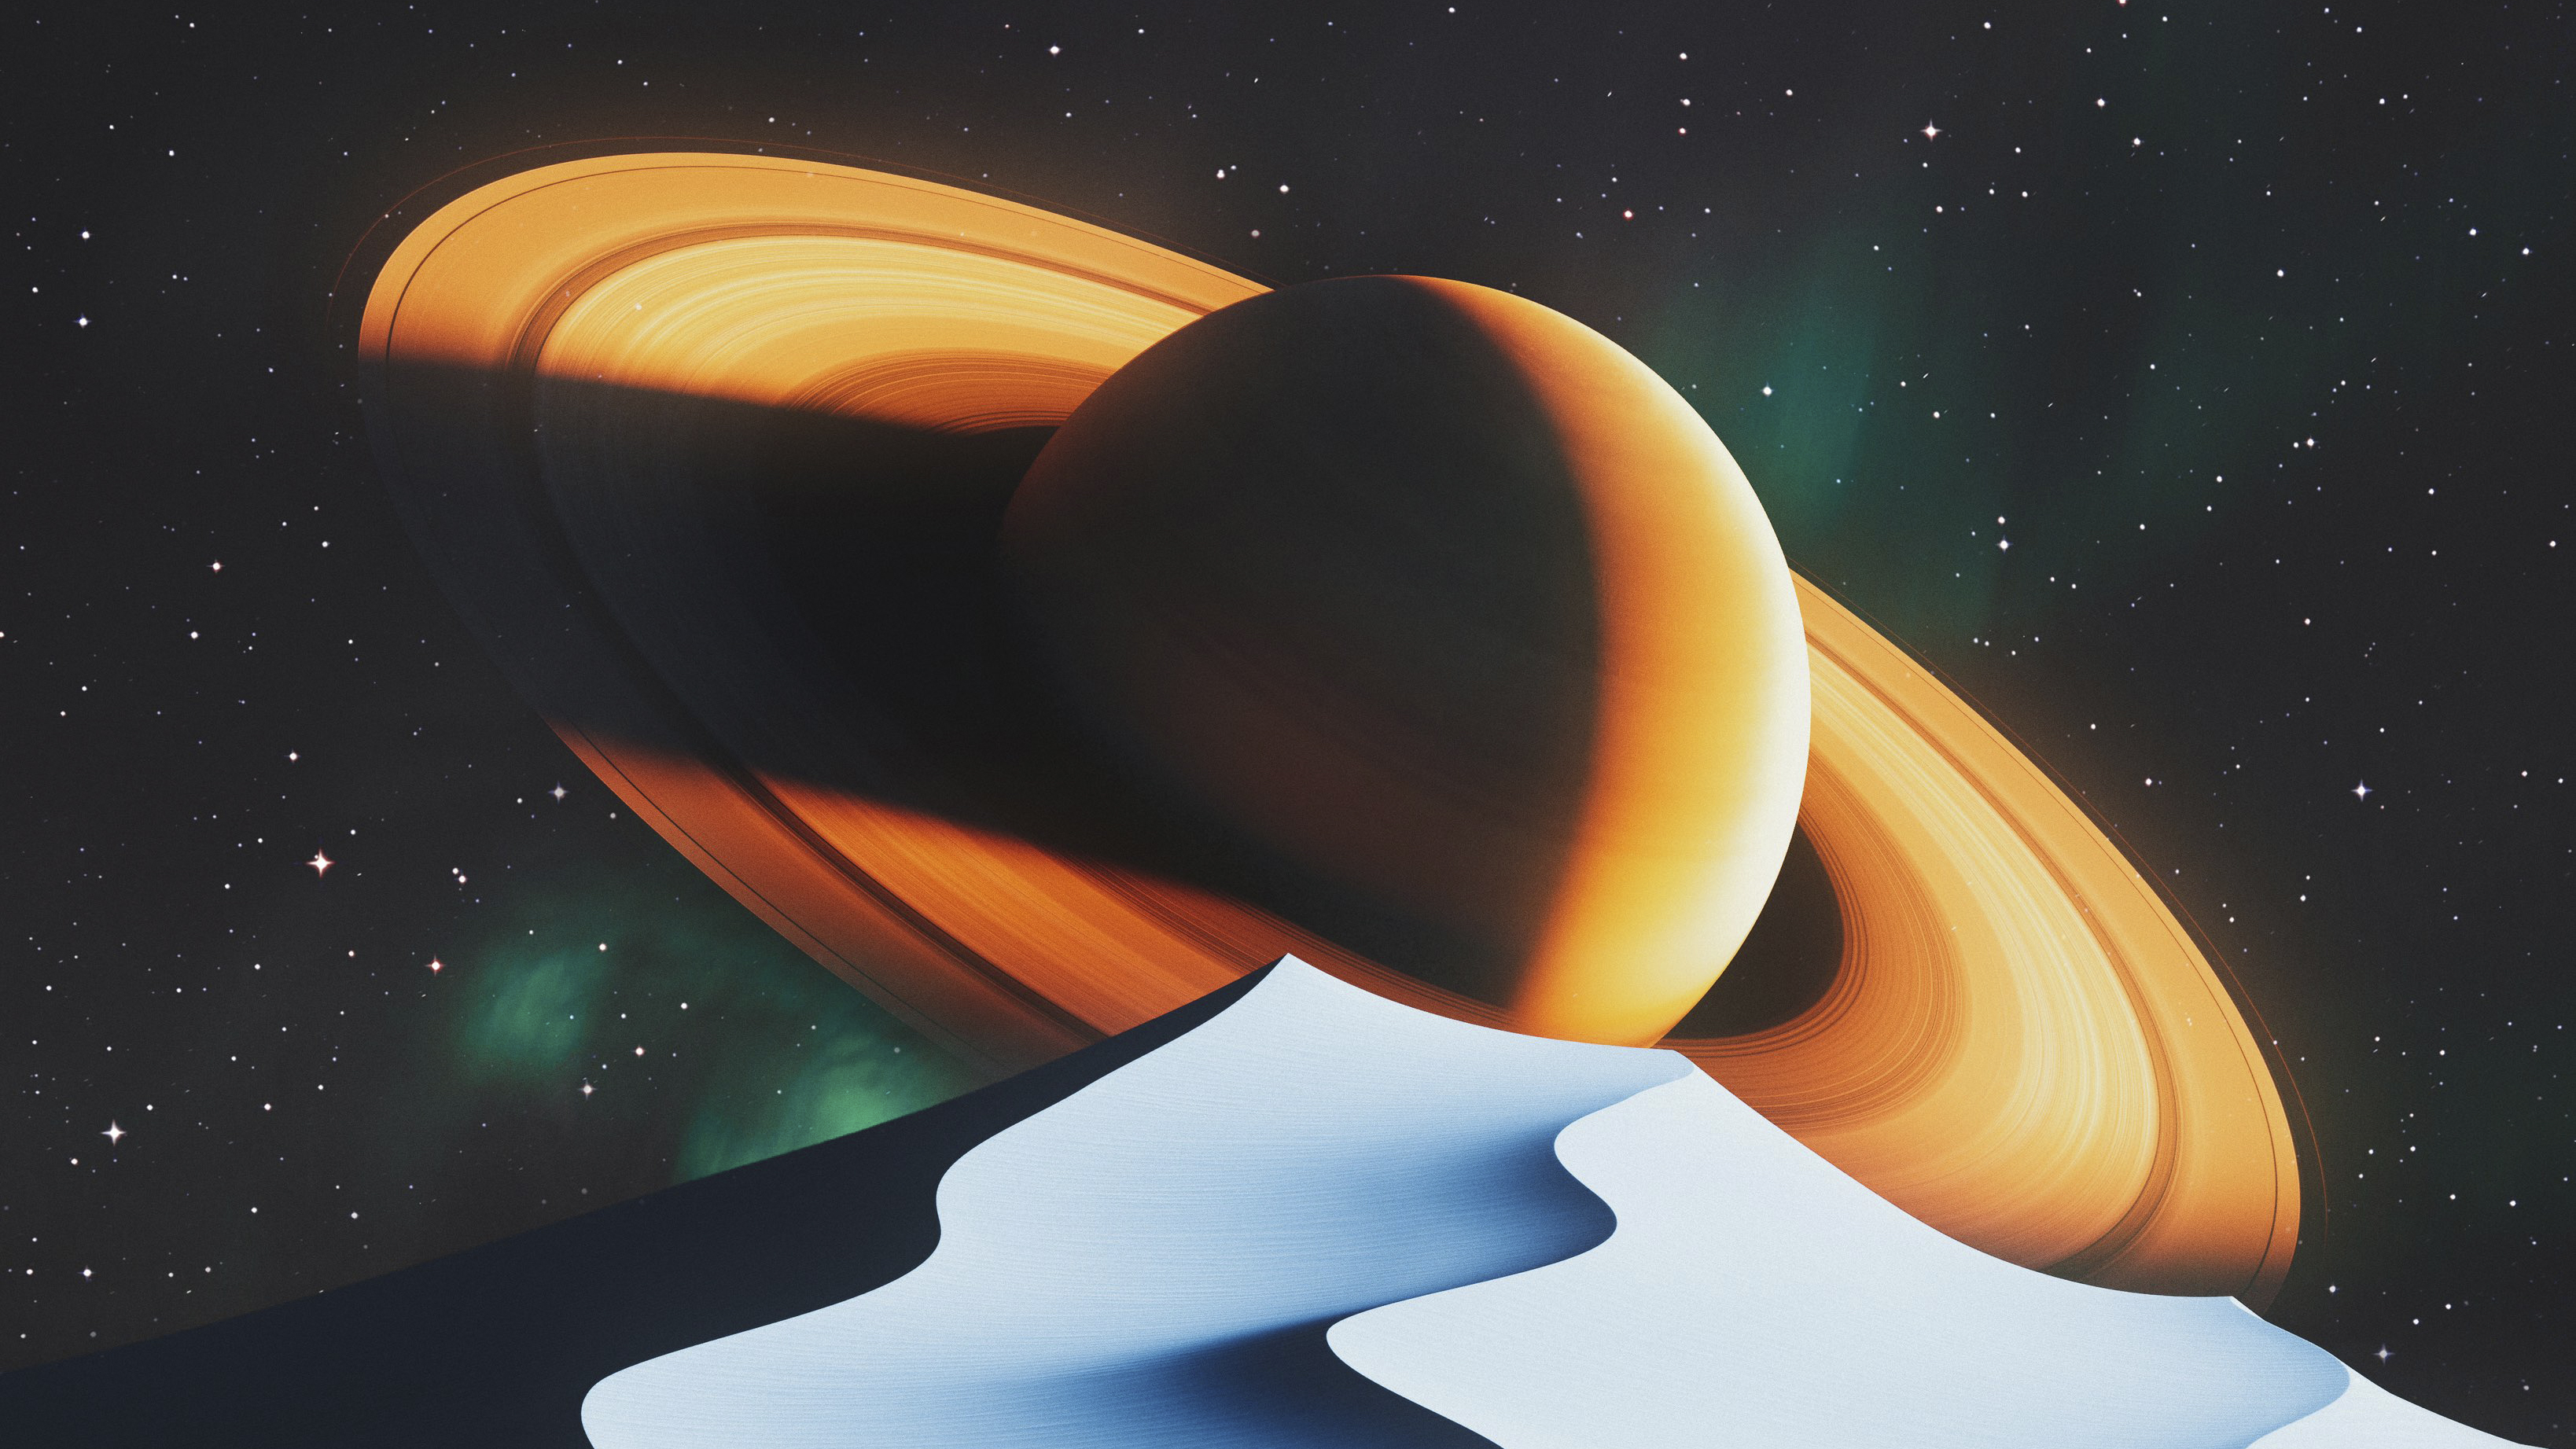 General 3276x1843 digital art artwork illustration nature landscape desert dunes planet Saturn start night sky sand abstract